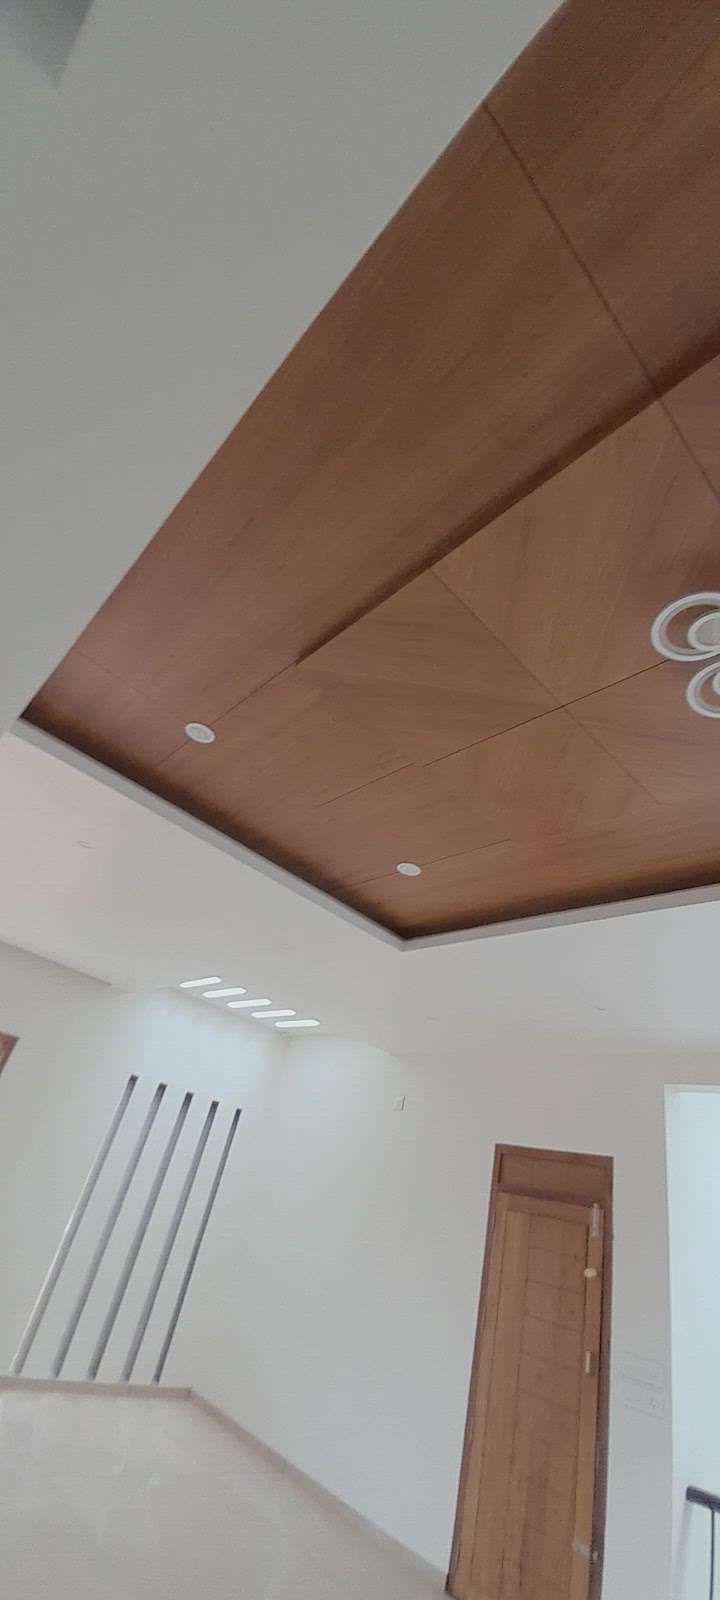 gypsum ceiling with plywood and veneer design
 #InteriorDesigner 
 #kitchencupboard